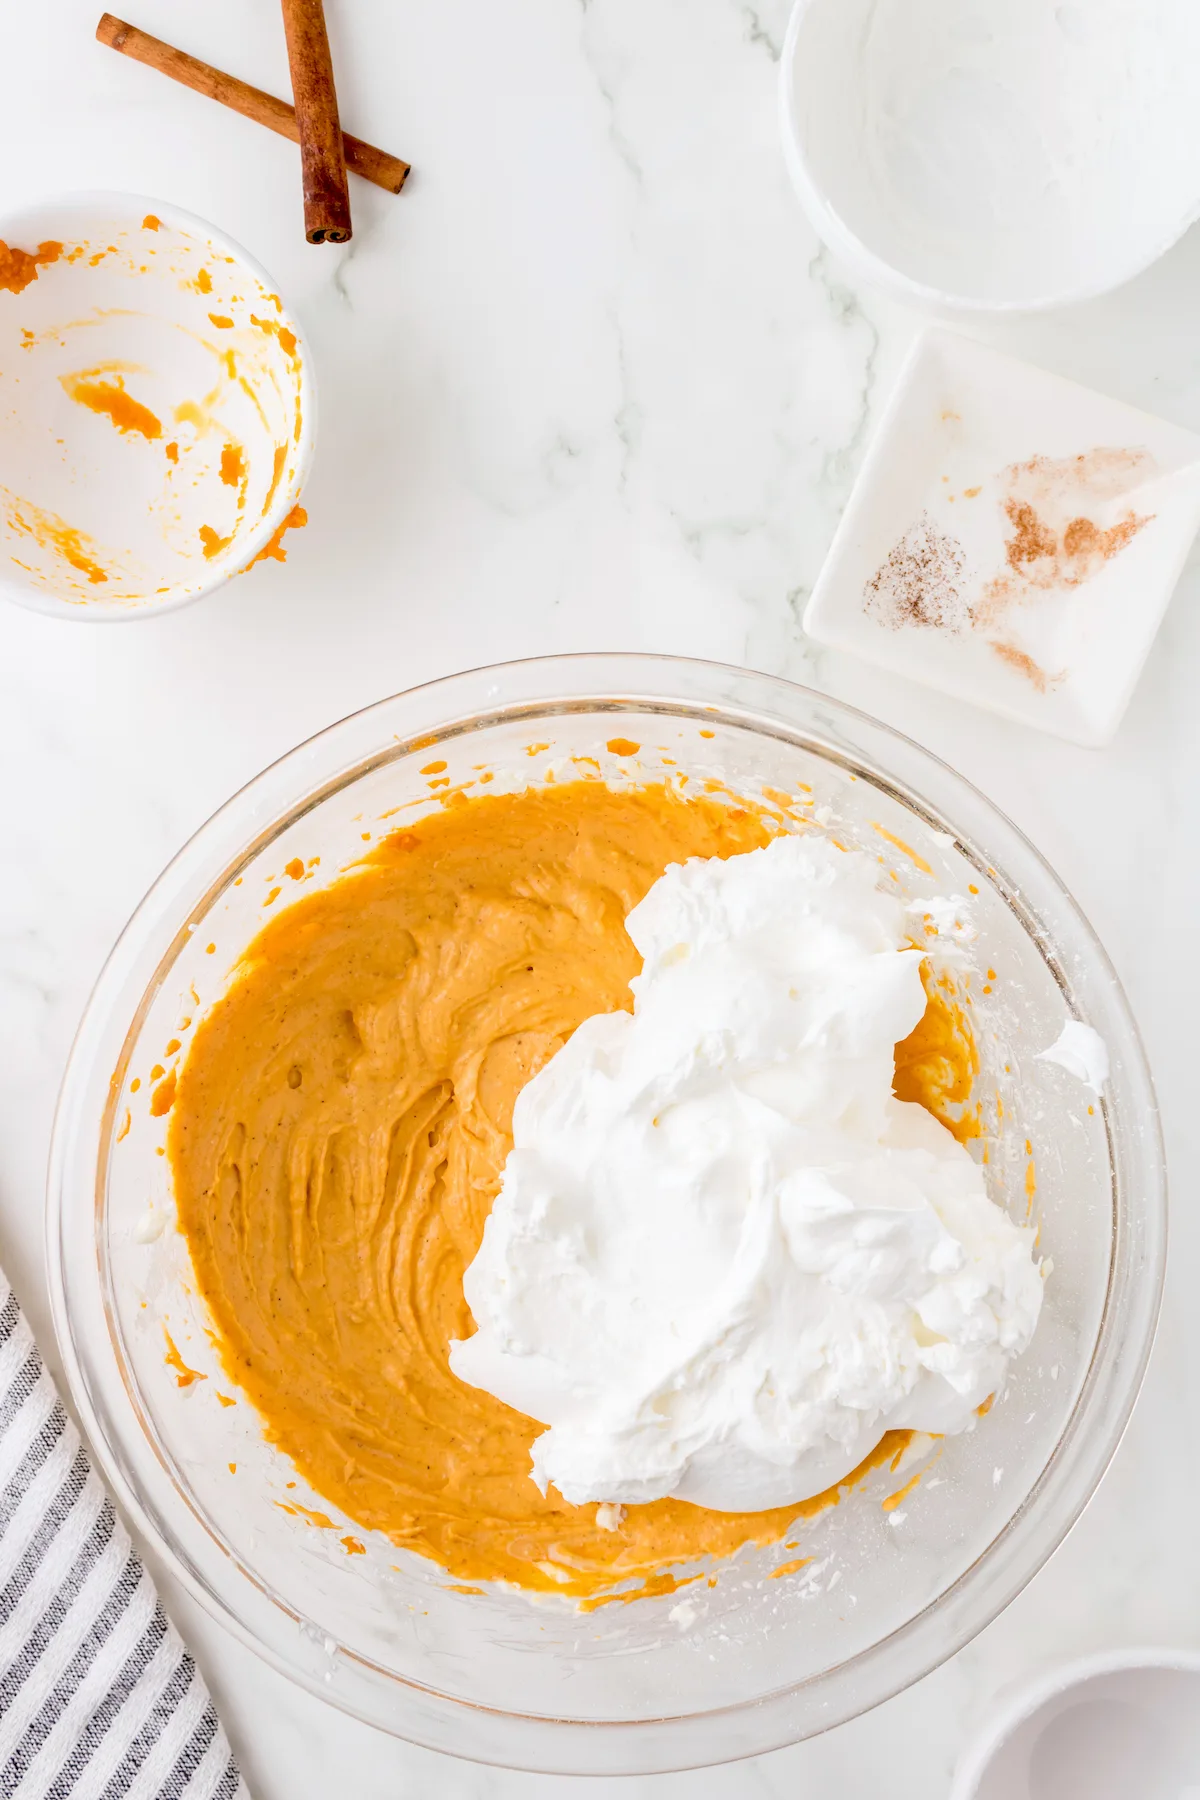 Adding whipped cream to the pumpkin dip